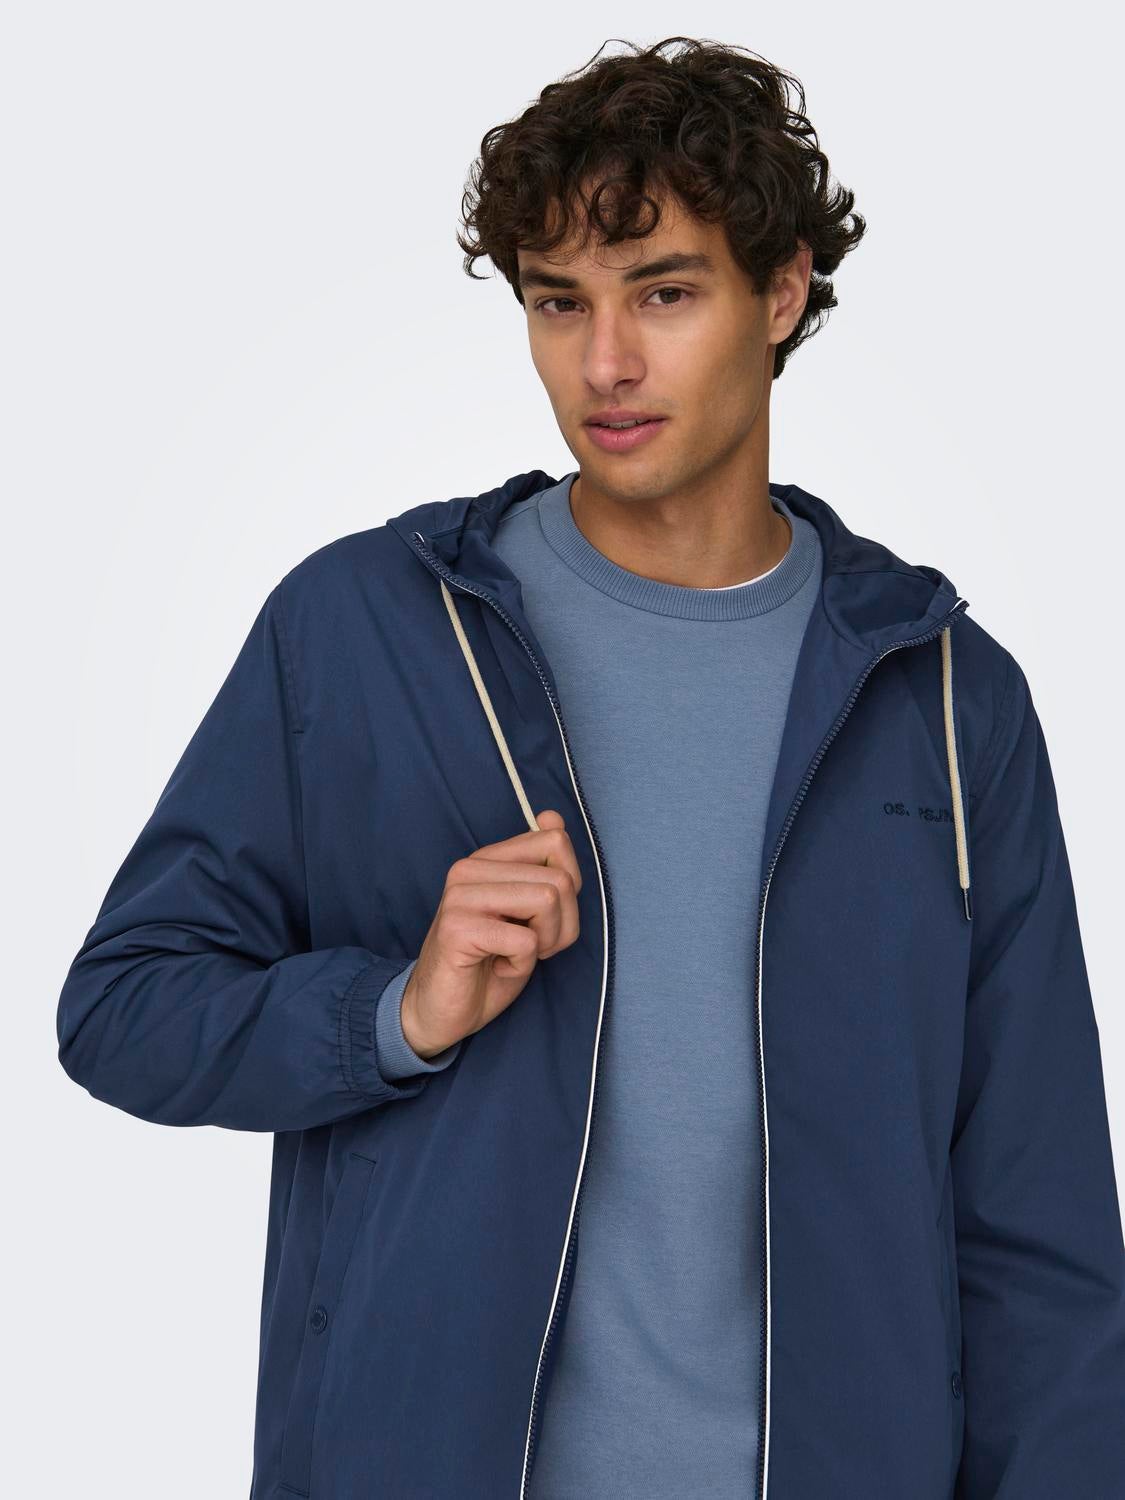 Hood with string regulation Jacket | Dark Blue | ONLY & SONS®